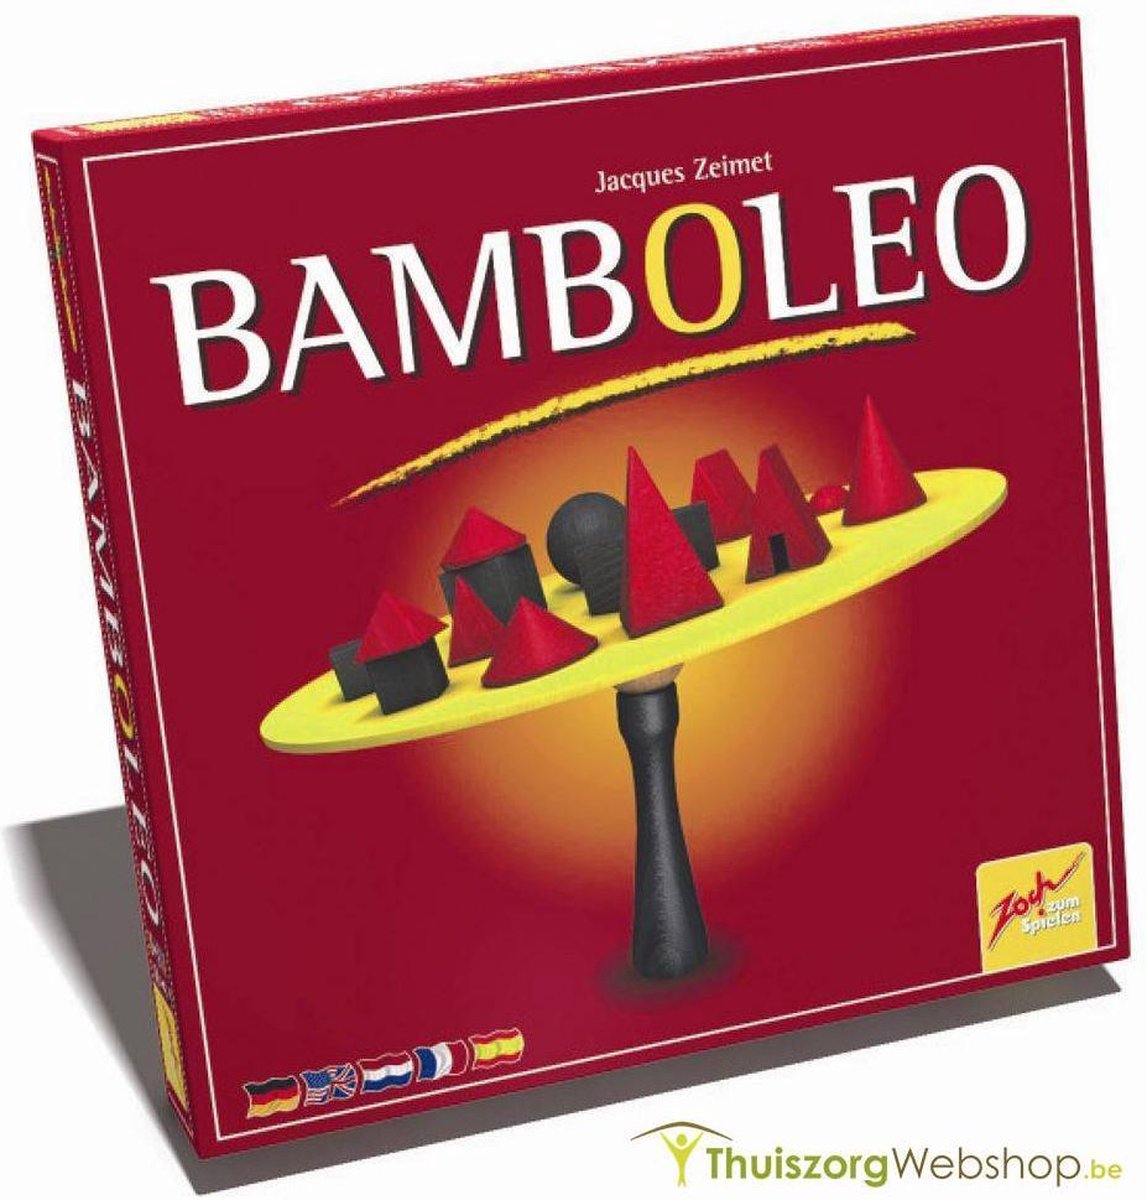 Bamboleo evenwichtsspel: